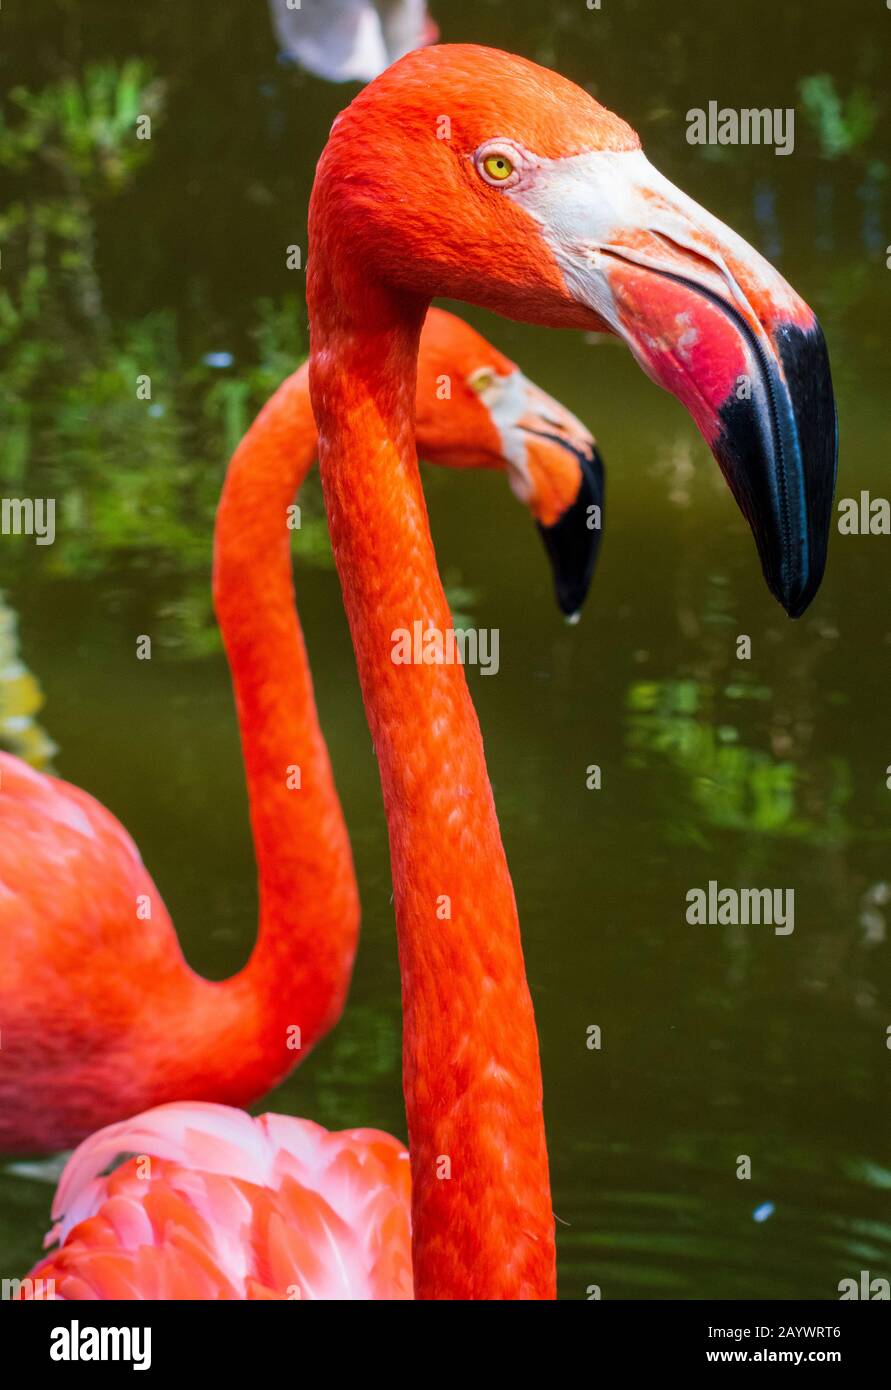 Pink Flamingos In Wasser, Tropical Bird Photography, Flamingos Close Up, Wetland Nature Reserve, Das Beste Flamingos Stockfoto